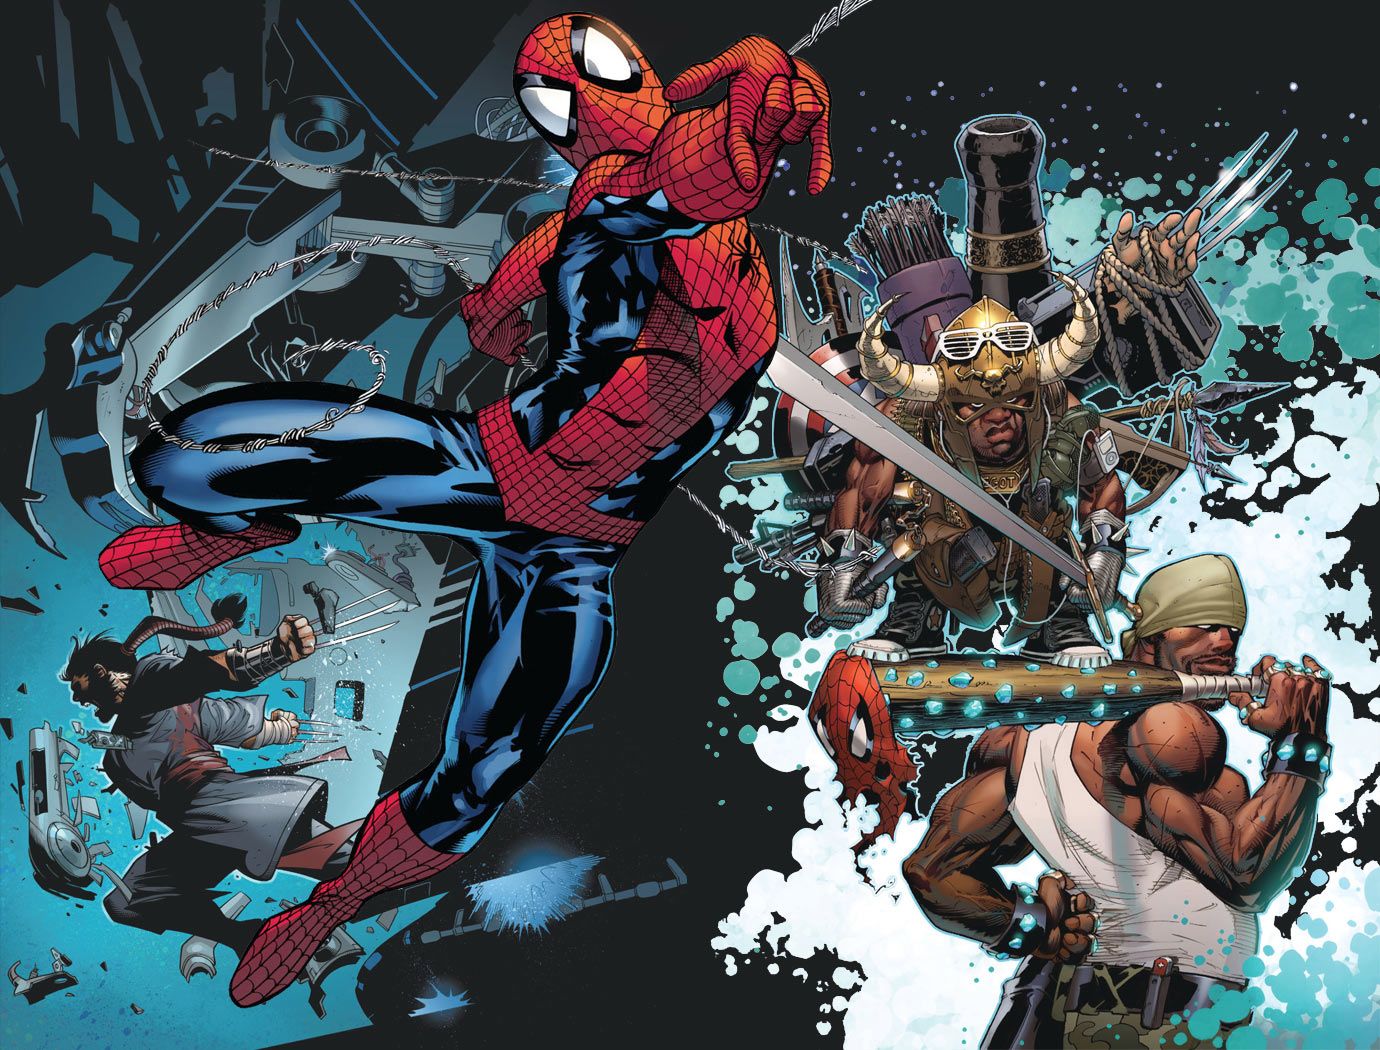 Astonishing Spider-Man and Wolverine image